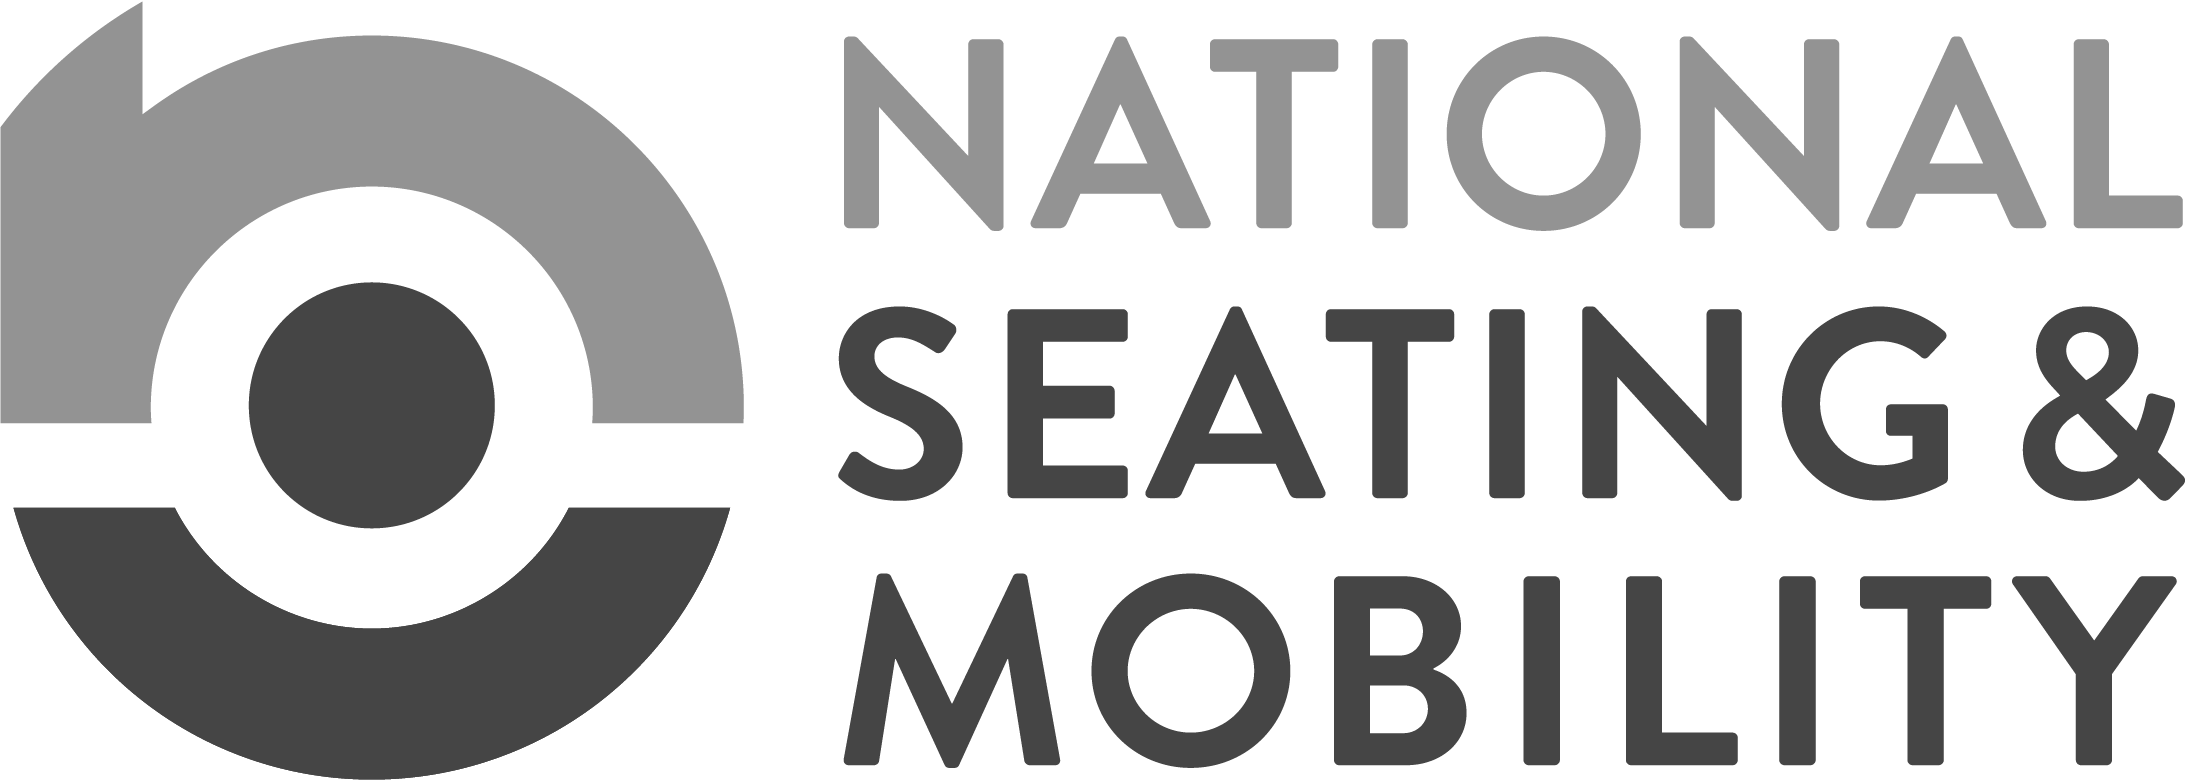 seating_mobility_greyscale_logo